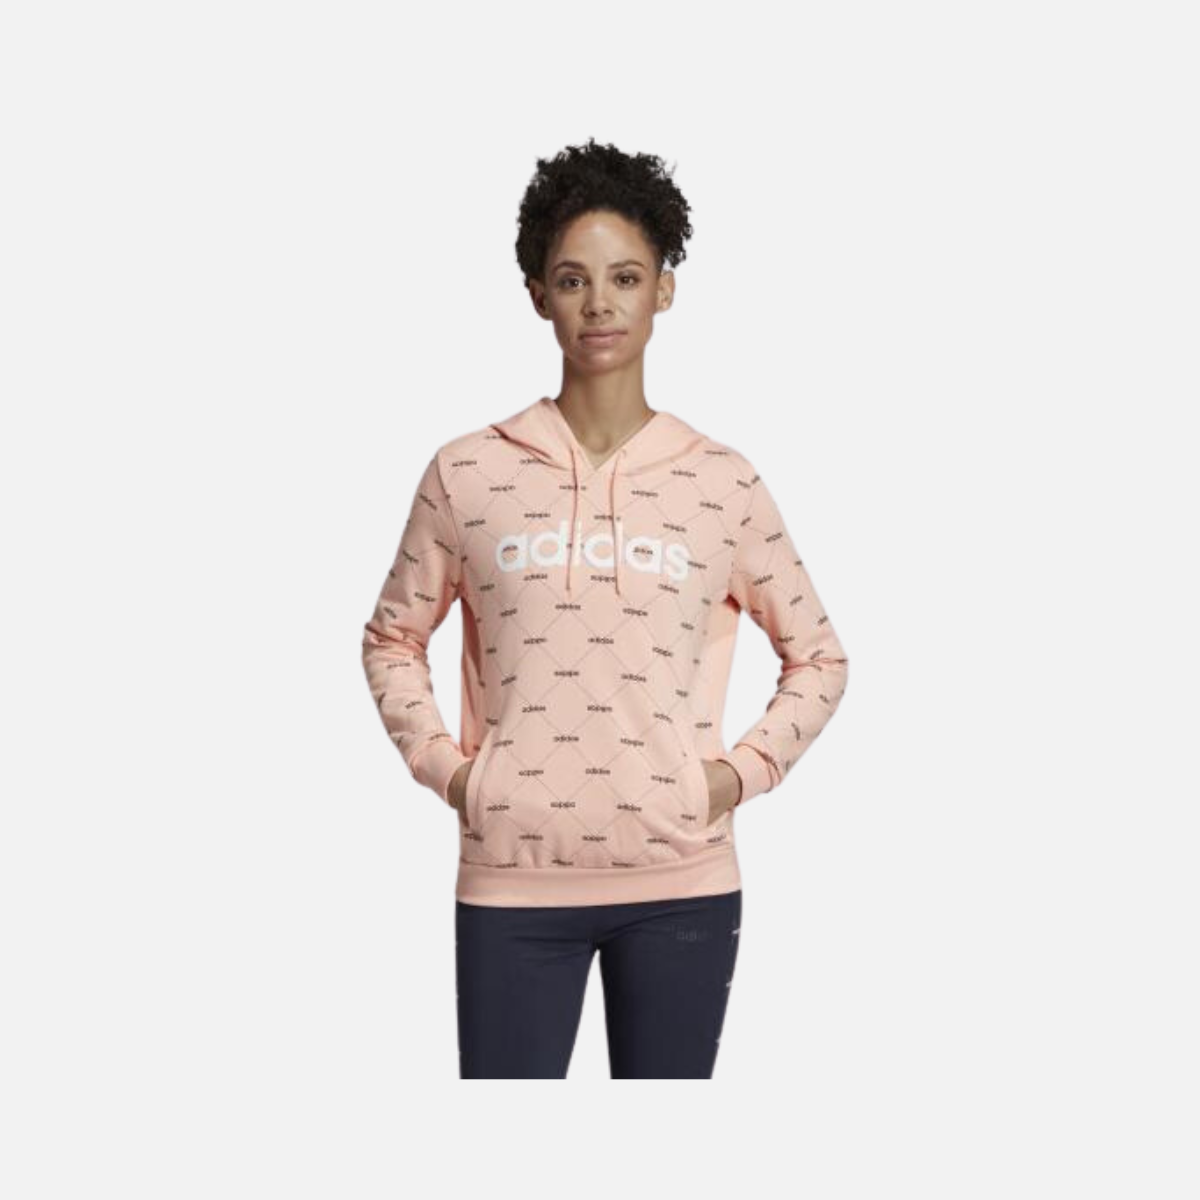 Adidas Linear Graphic Women's Hoodie -Glow Pink/Black